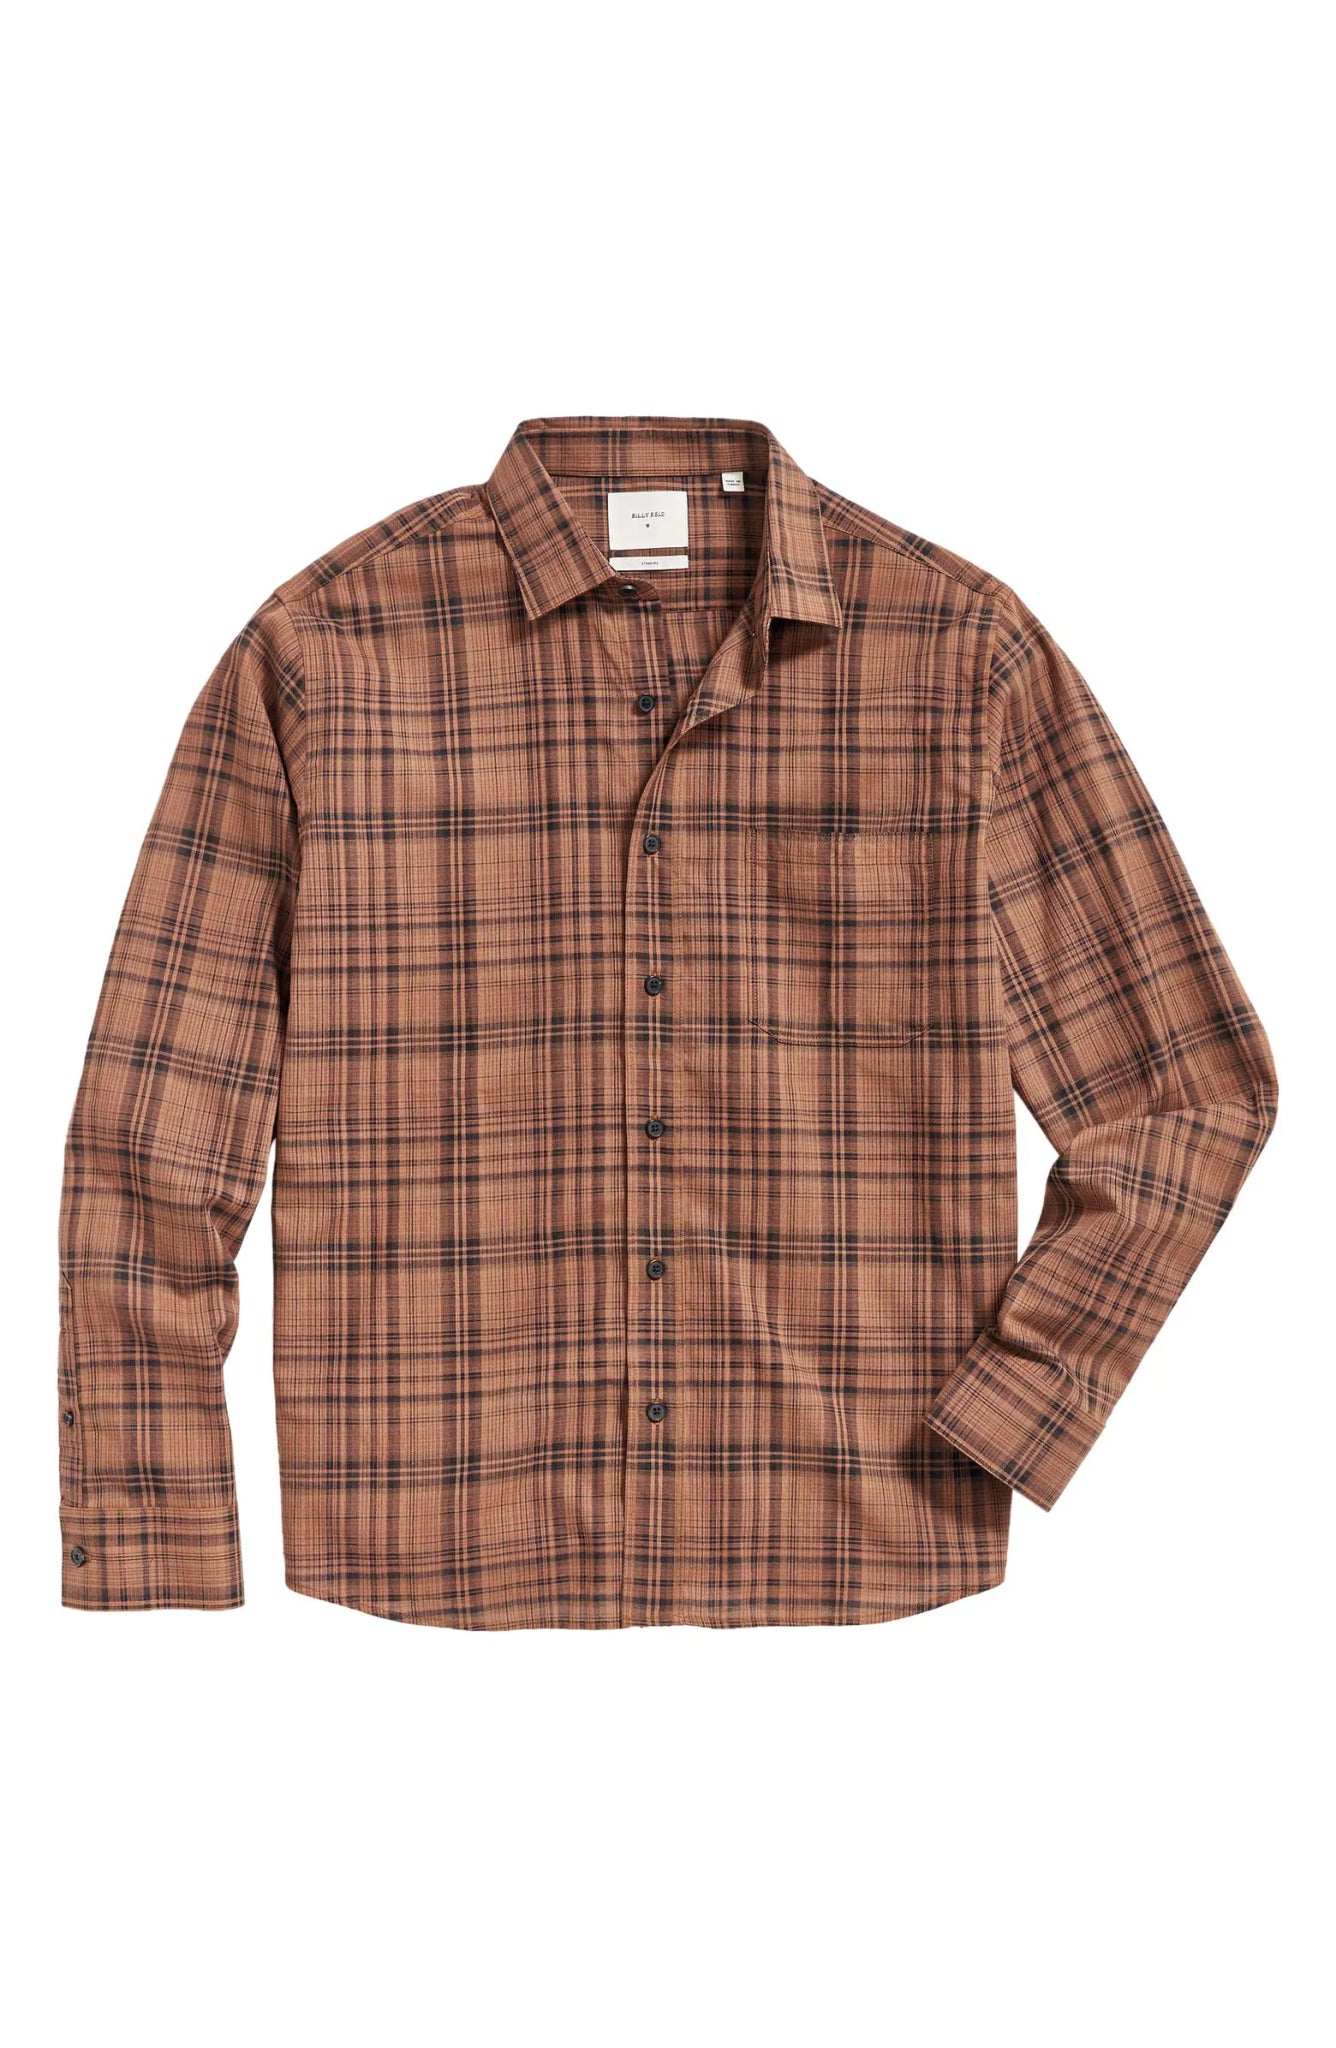 Billy Reid Tuscumbia Shirt in Highland Brown/Black - Estilo Boutique